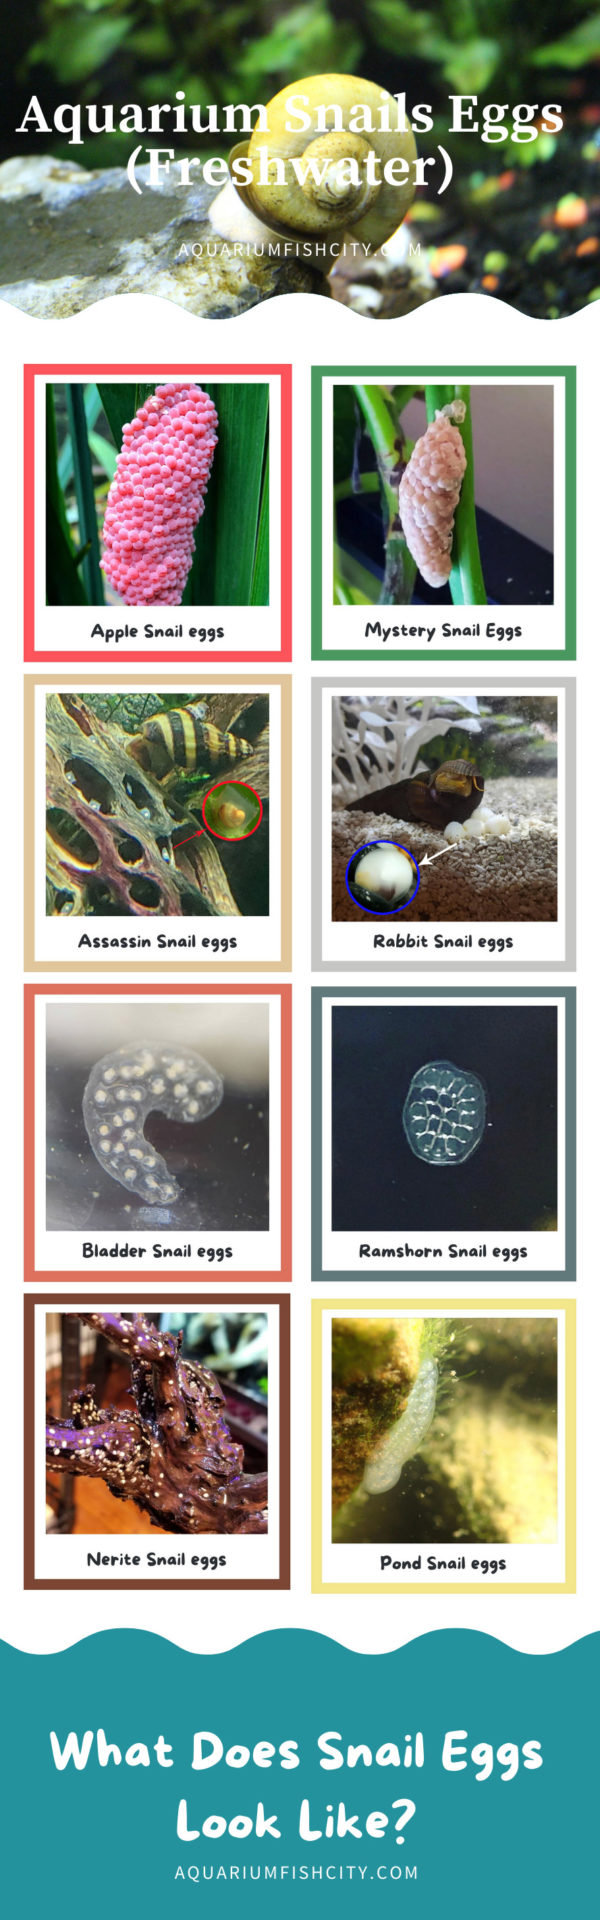 What Do Assassin Snail Eggs Look Like